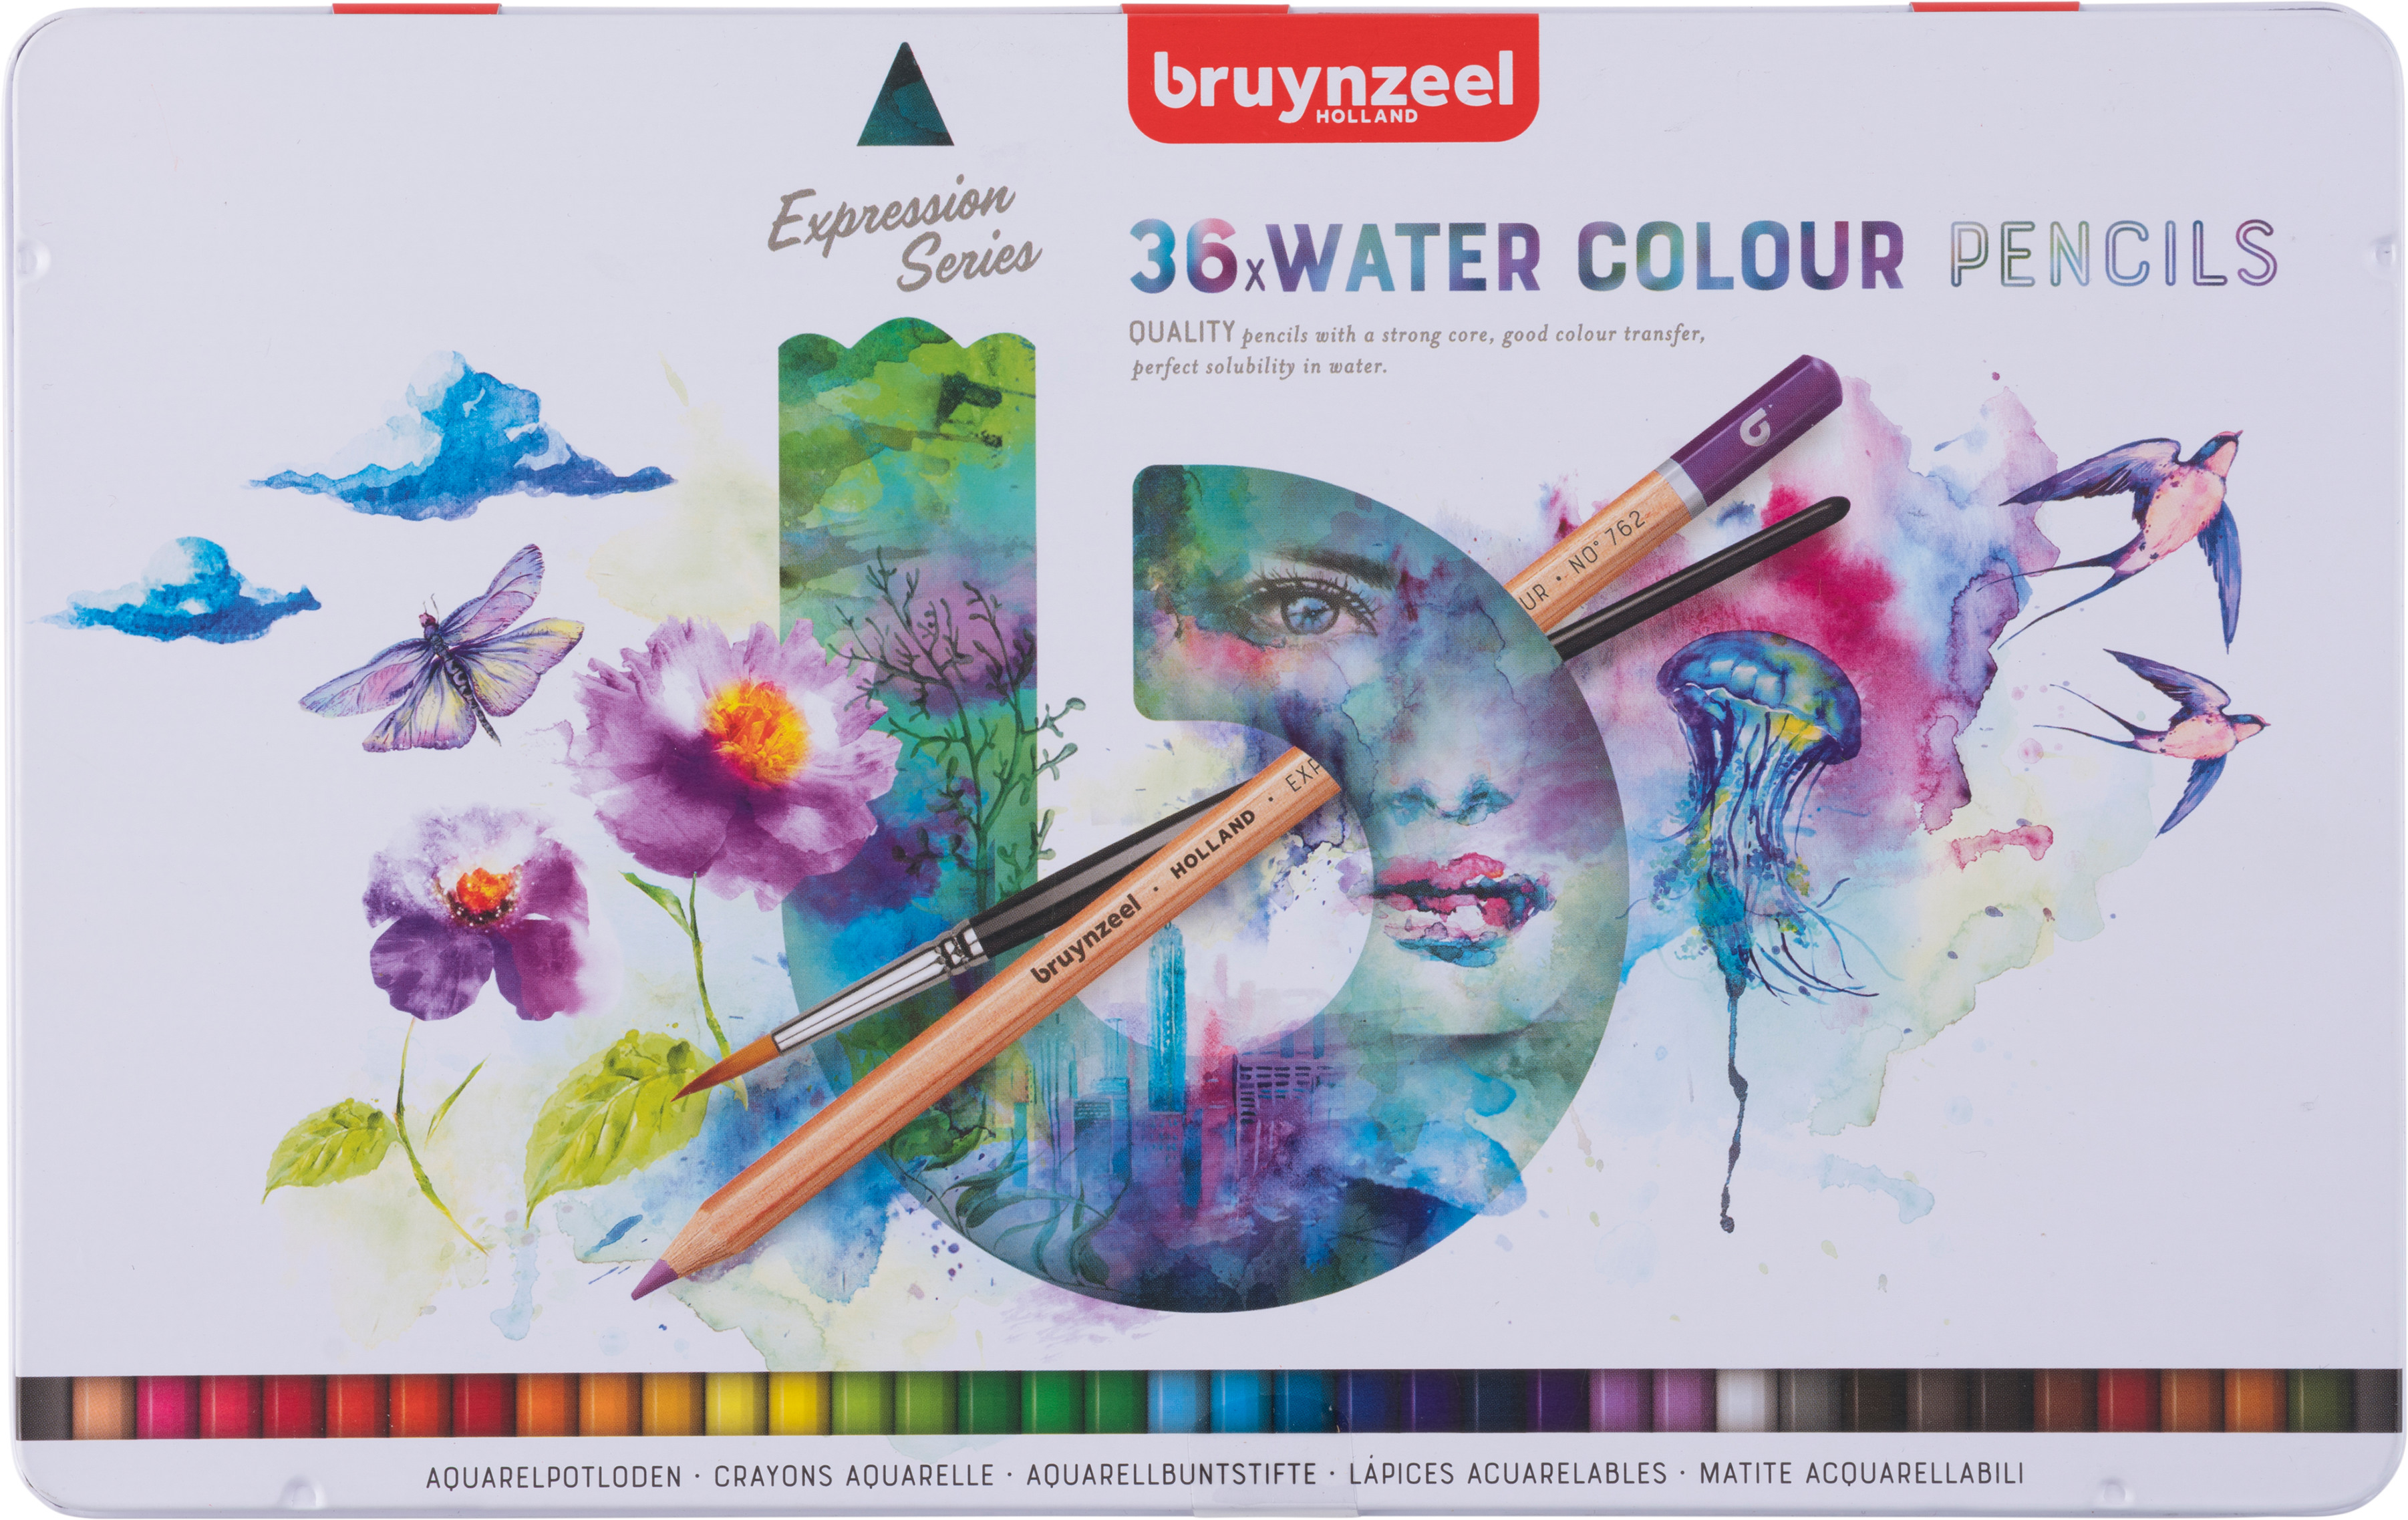 BRUYNZEEL Aquarellfarbstifte Expression 60313036 36 Farben Metalletui